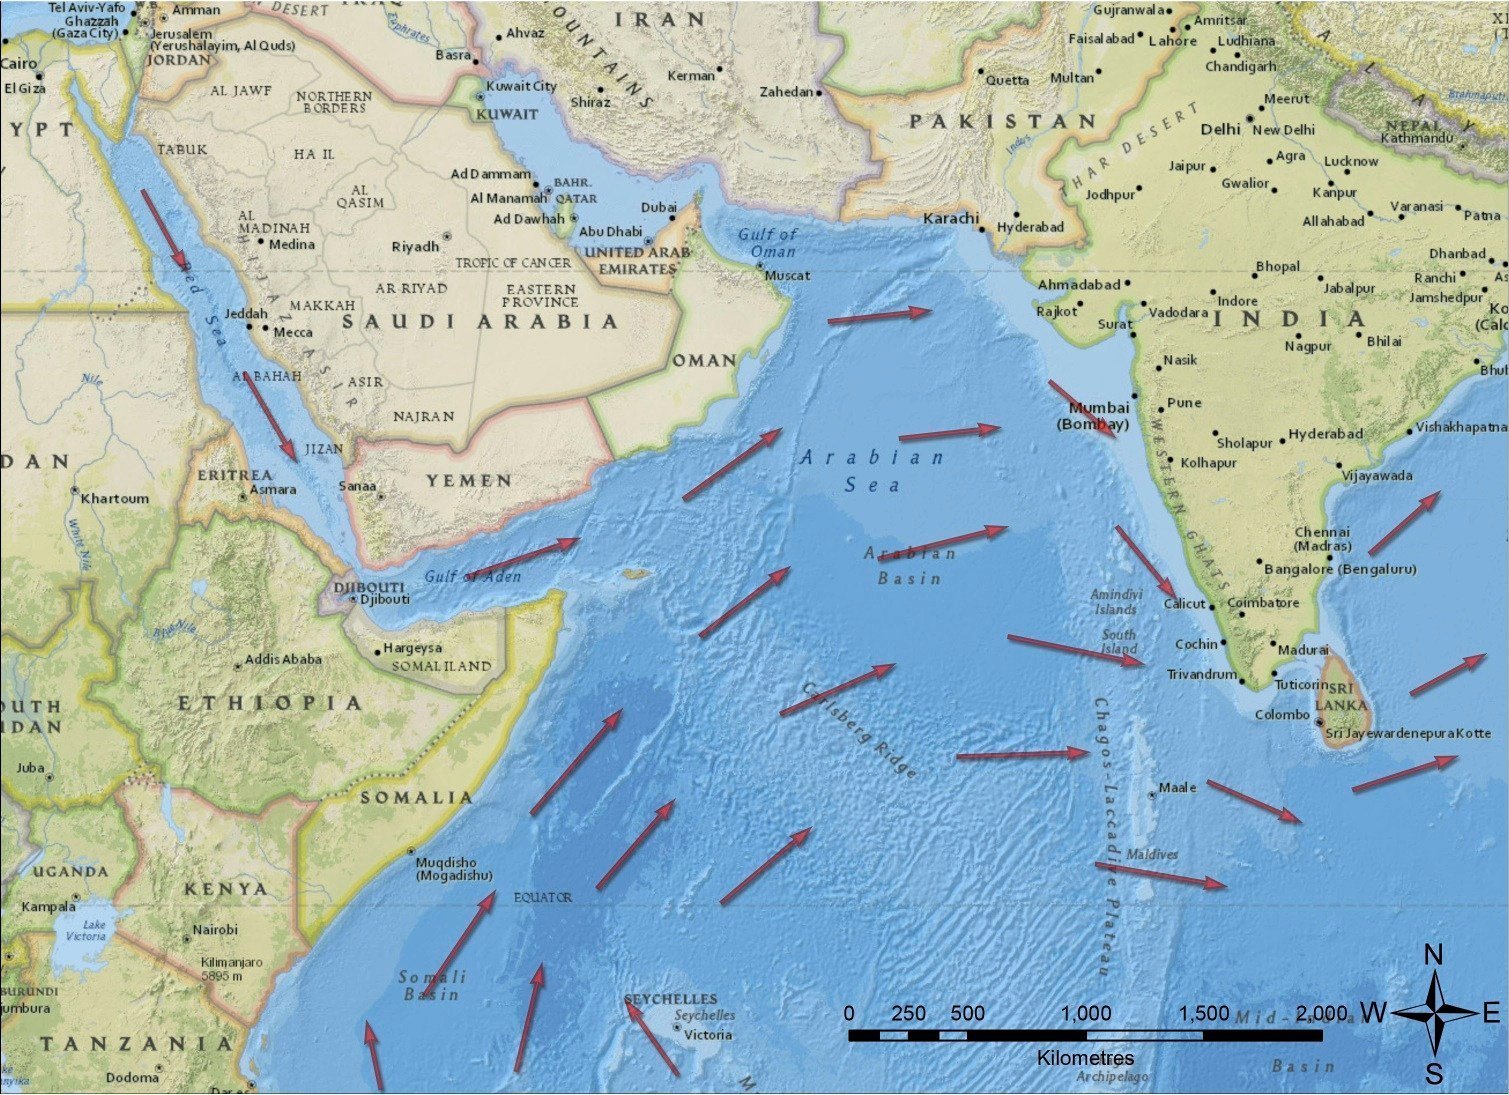 4 залива индийского океана. Оманский залив индийский океан. Персидский залив Аравийское море. Персидский залив на карте индийского океана. Персидский залив на карте океанов.